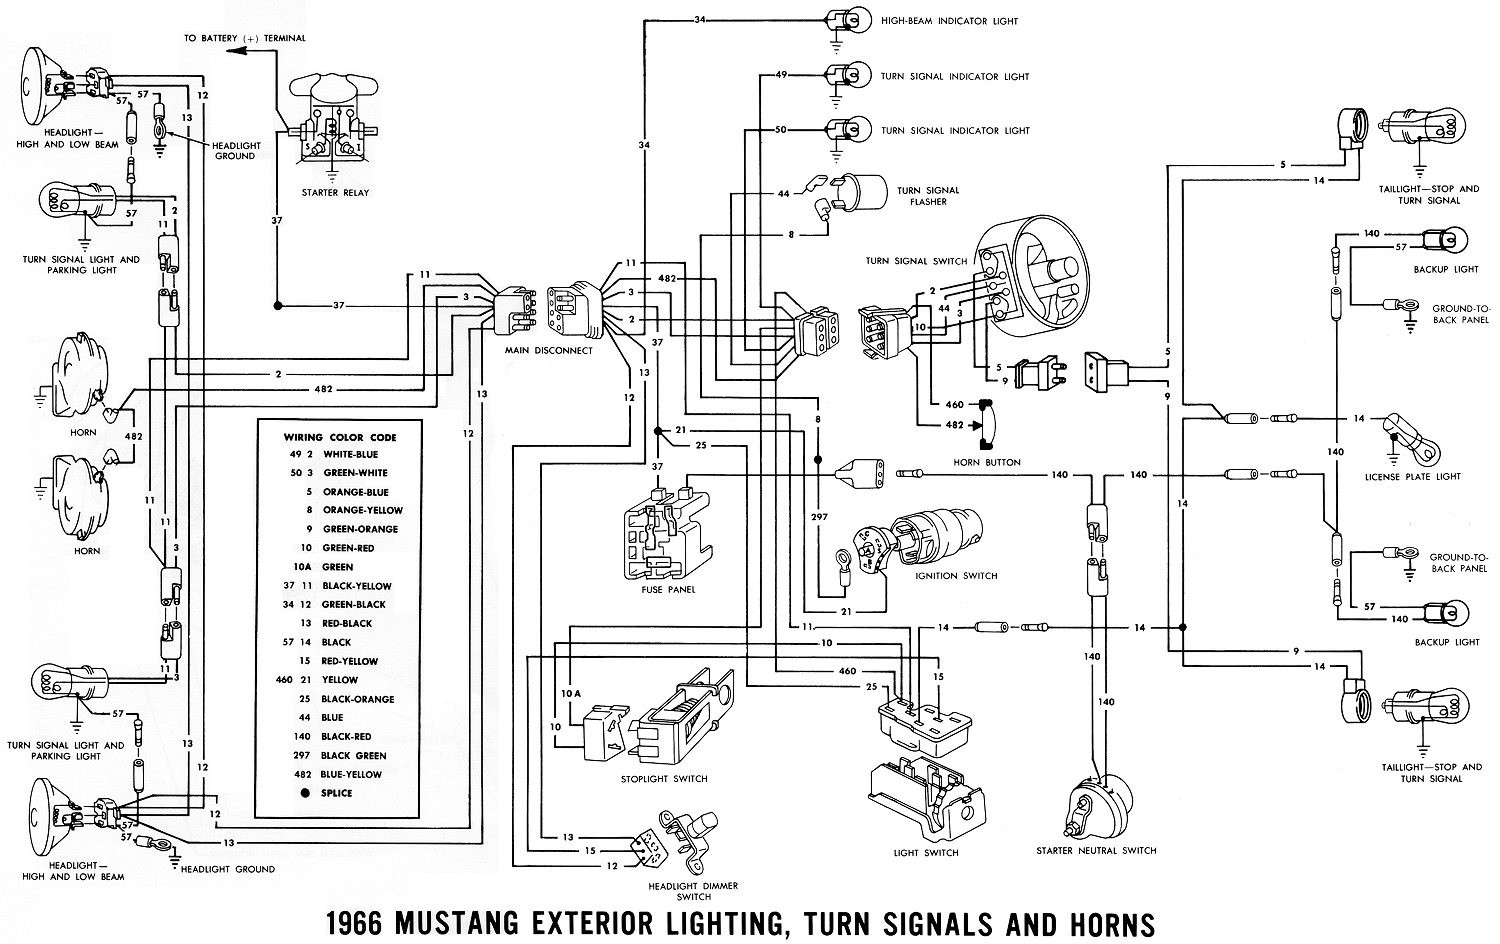 1965 Mustang Wiring Diagram Best 1966 Mustang Wiring Diagrams Average Joe Restoration Tearing